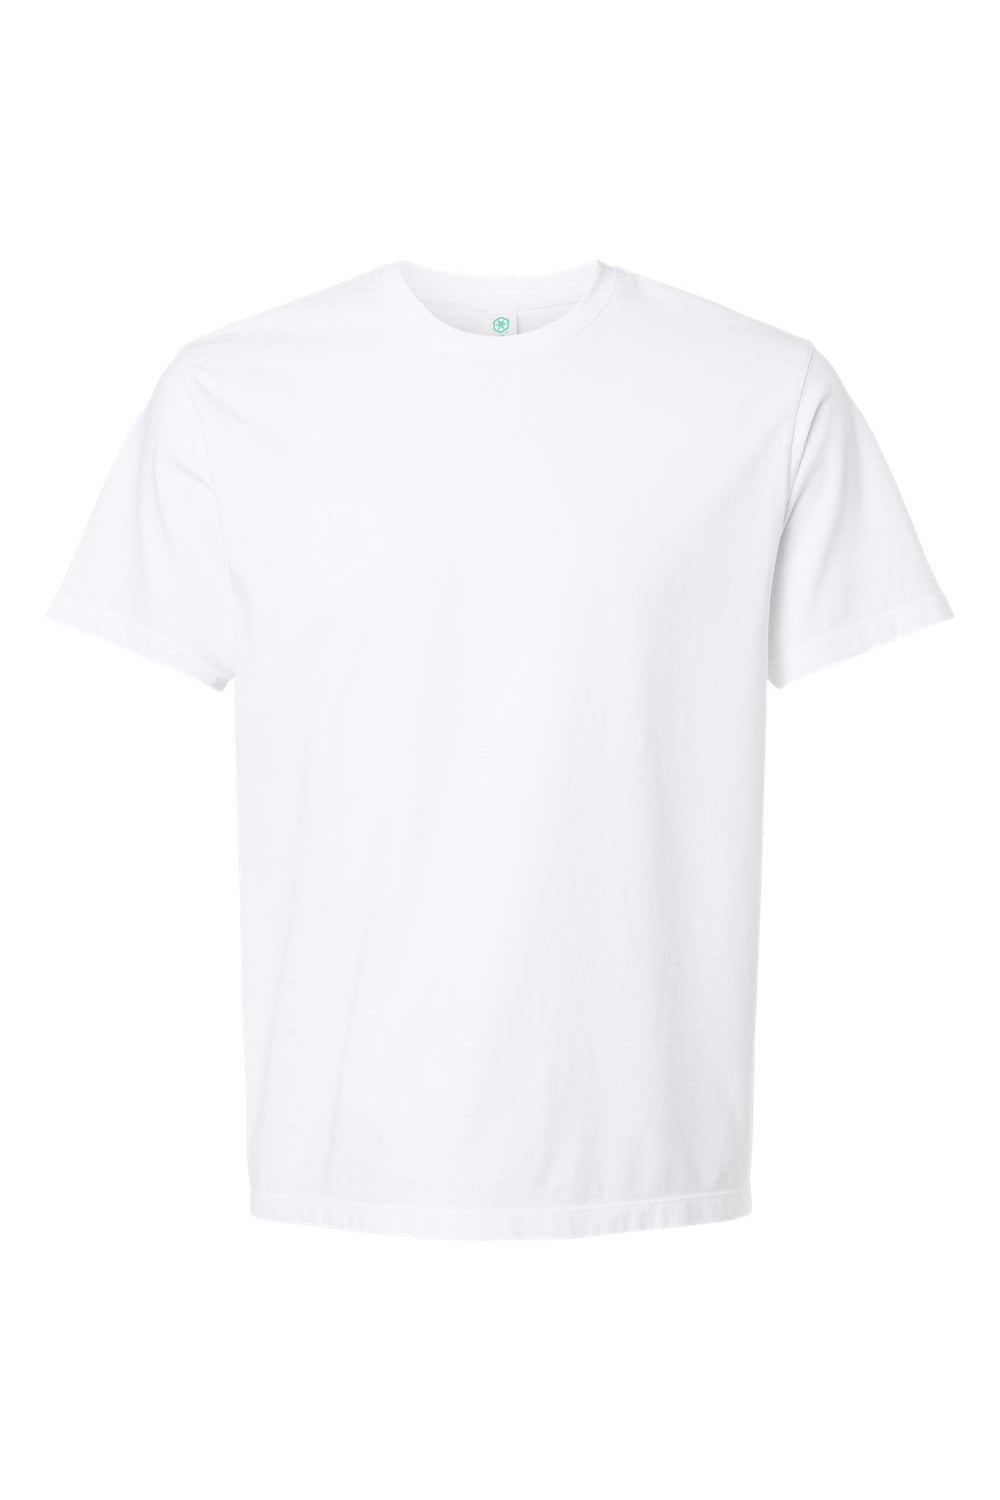 SoftShirts 400 Mens Organic Short Sleeve Crewneck T-Shirt White Flat Front